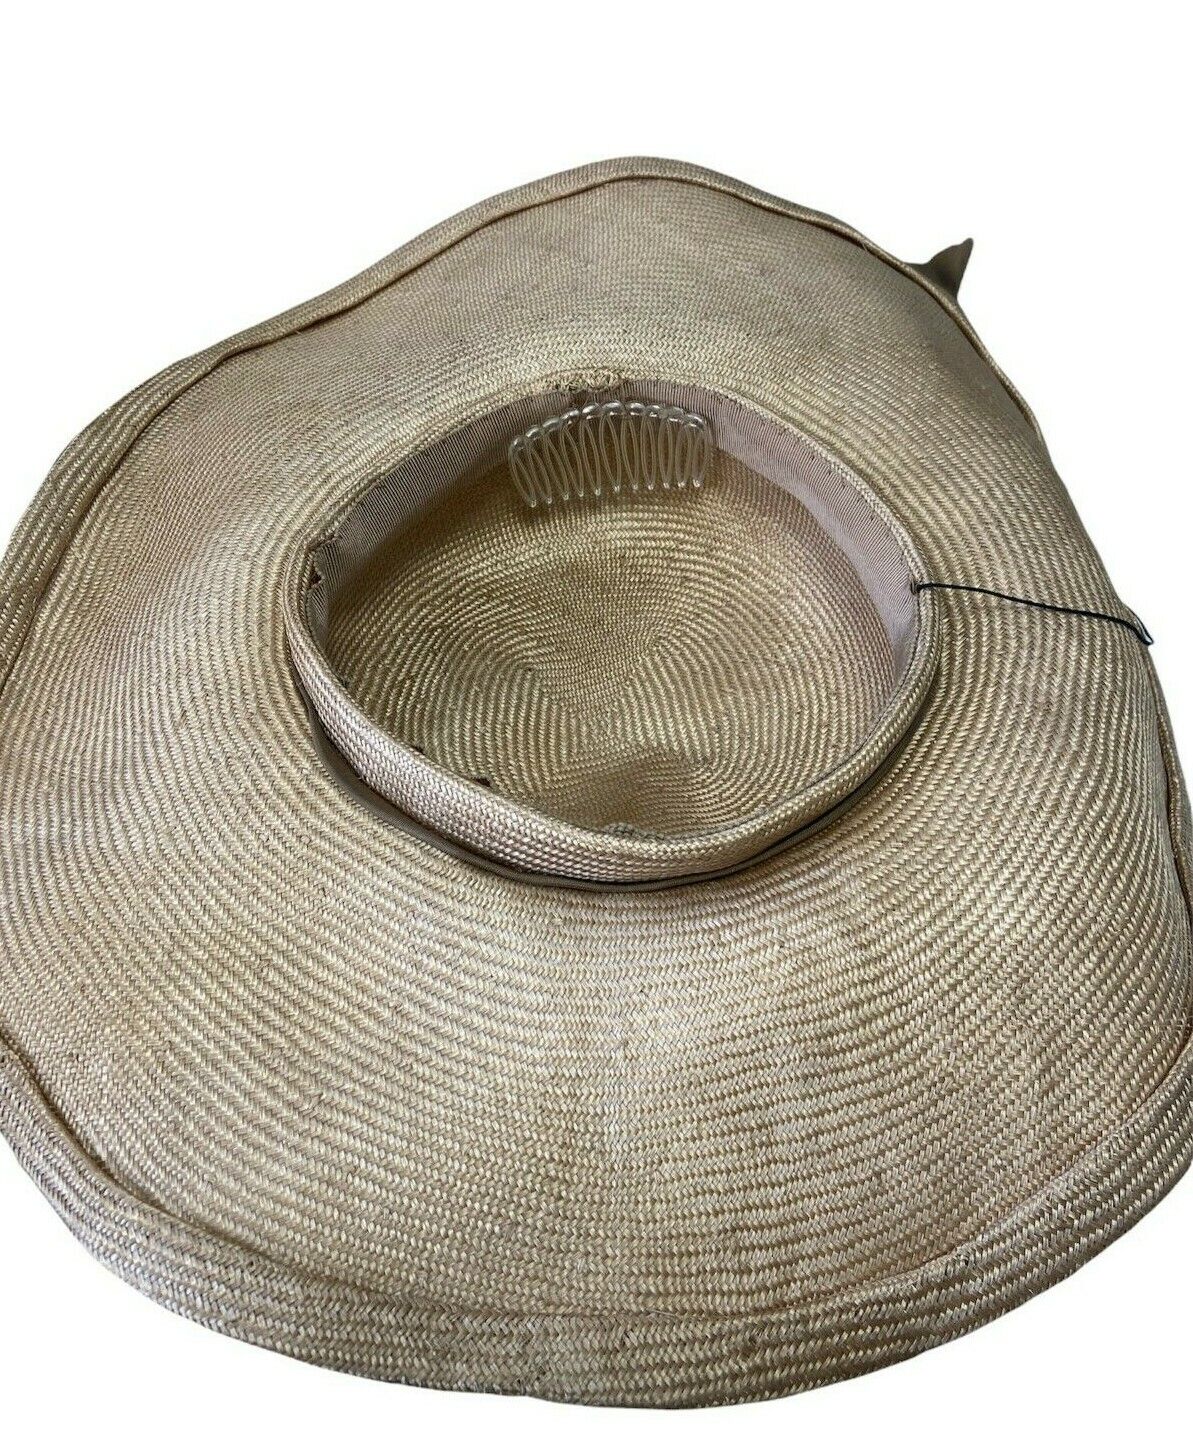 Hat - Dalbet women's hat